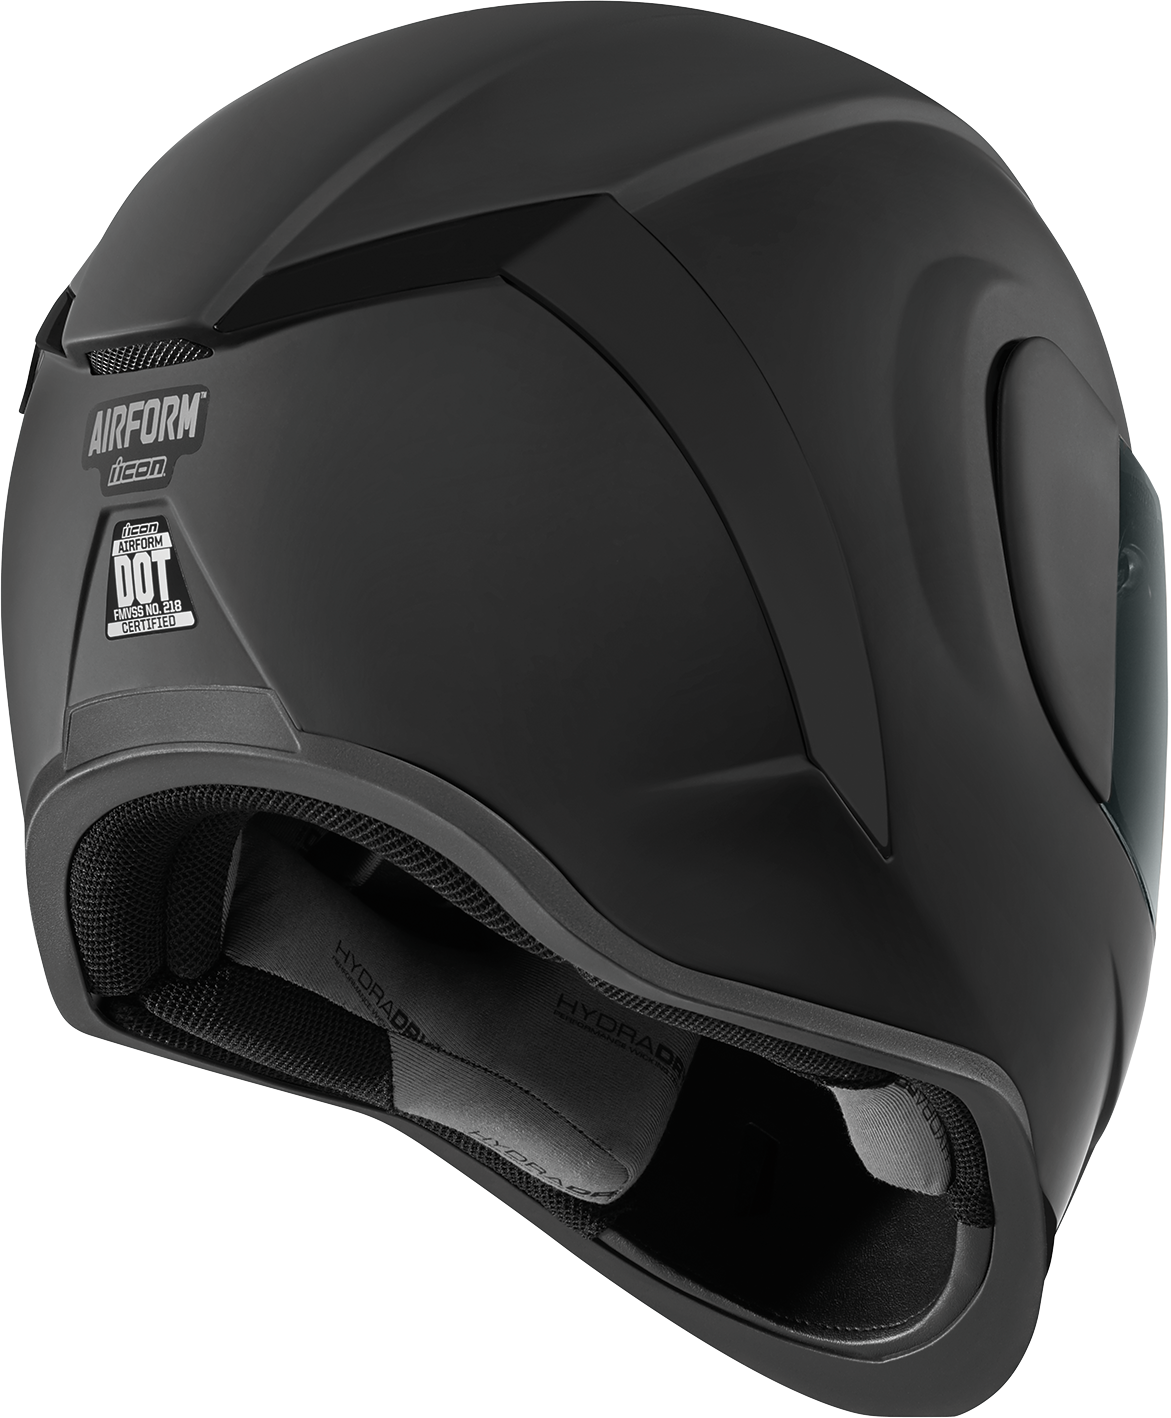 ICON Airform™ Helmet - Dark - Rubatone - Medium 0101-15451